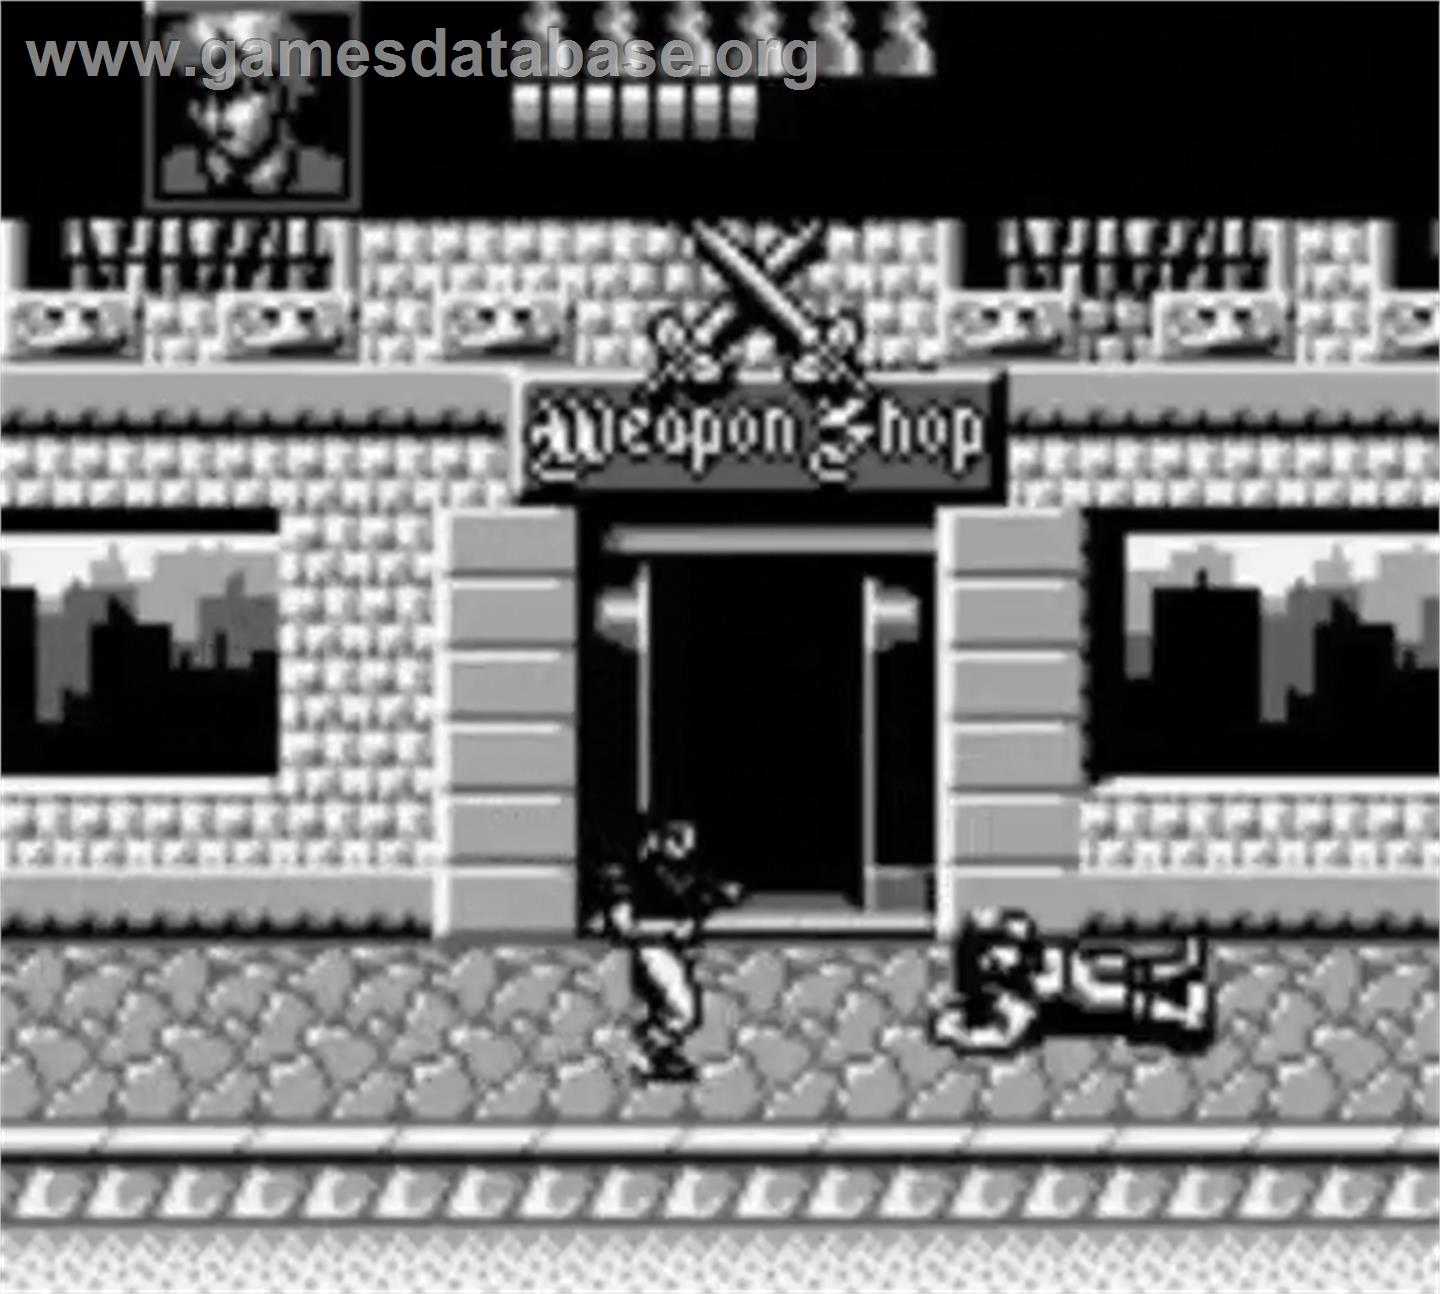 Double Dragon 3 - The Rosetta Stone - Nintendo Game Boy - Artwork - In Game